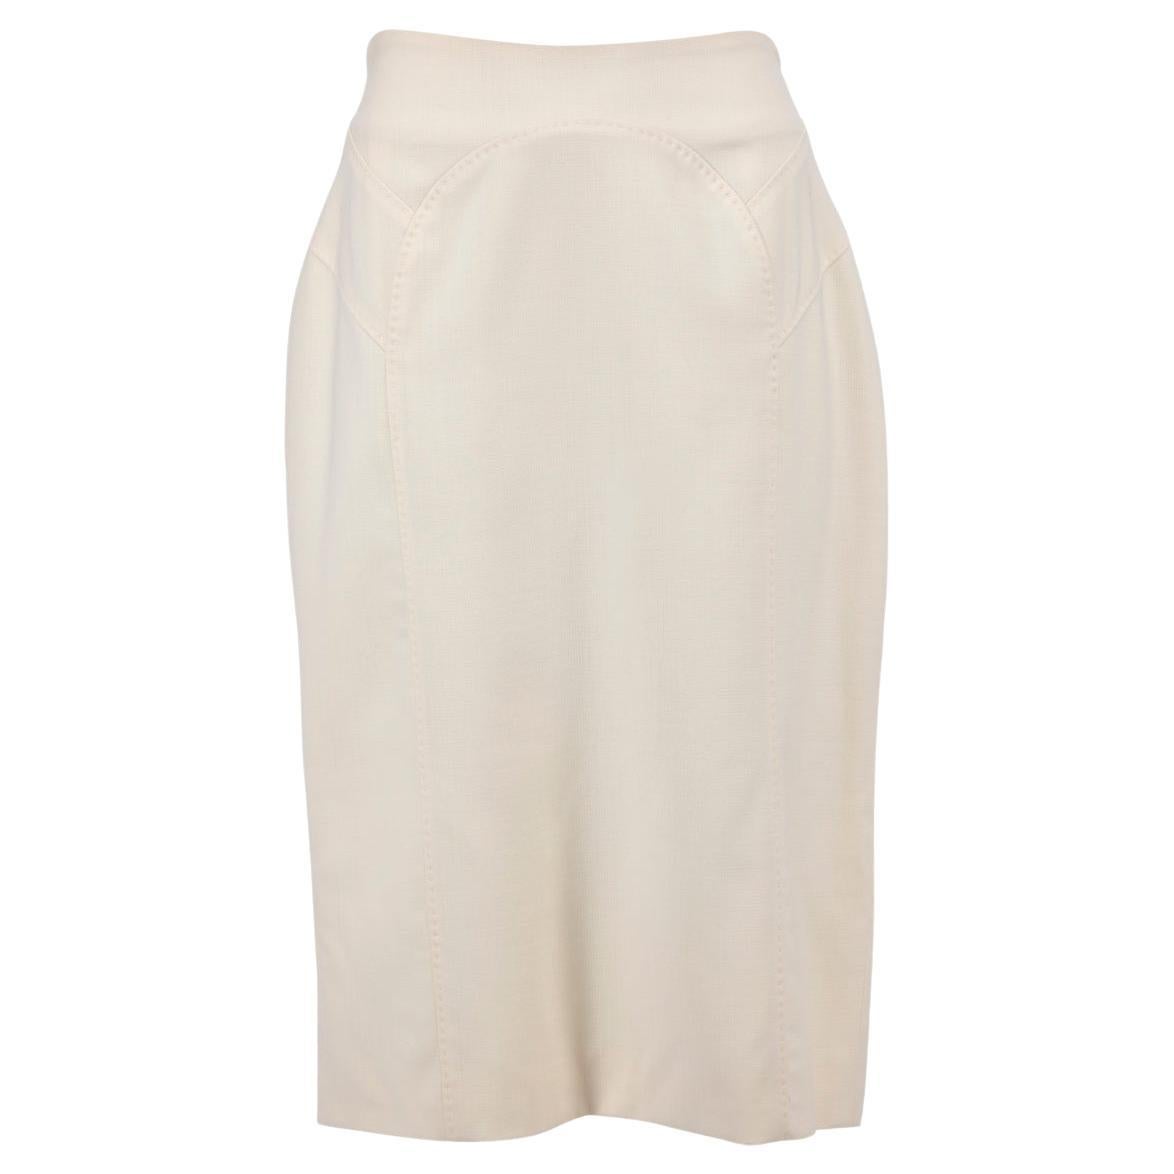 Pre-Loved Amanda Wakeley Women's Cream Wool Fitted Pencil Skirt